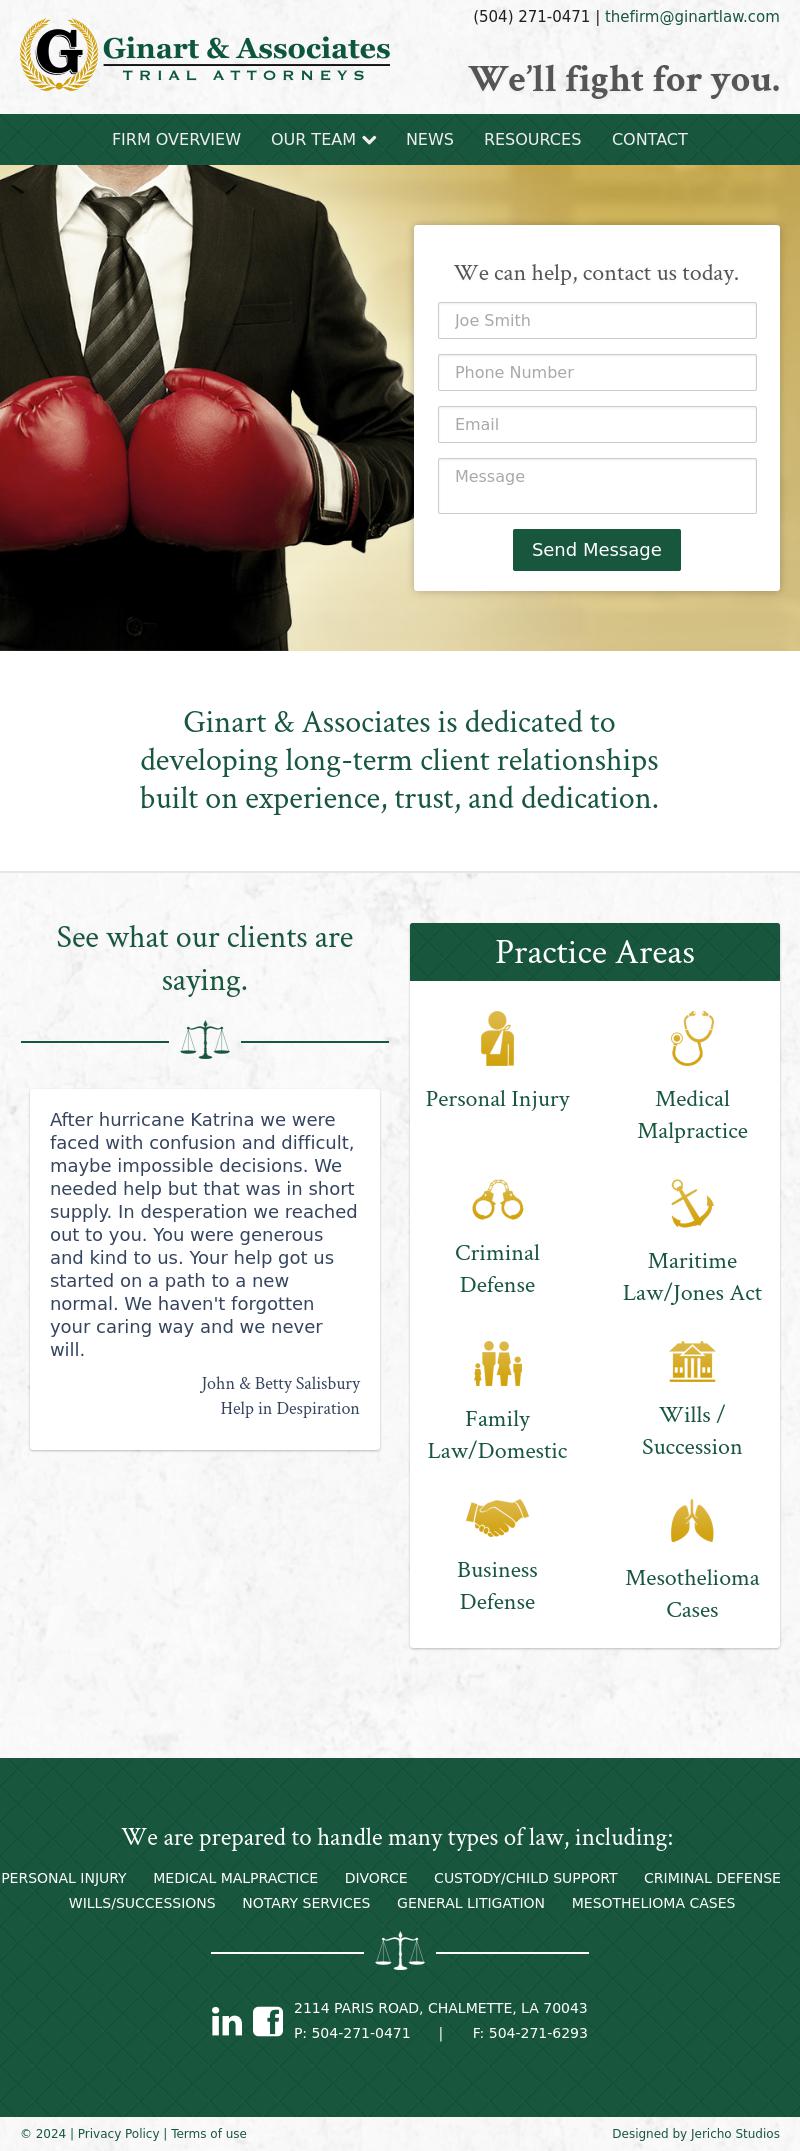 Ginart & Associates - Chalmette LA Lawyers